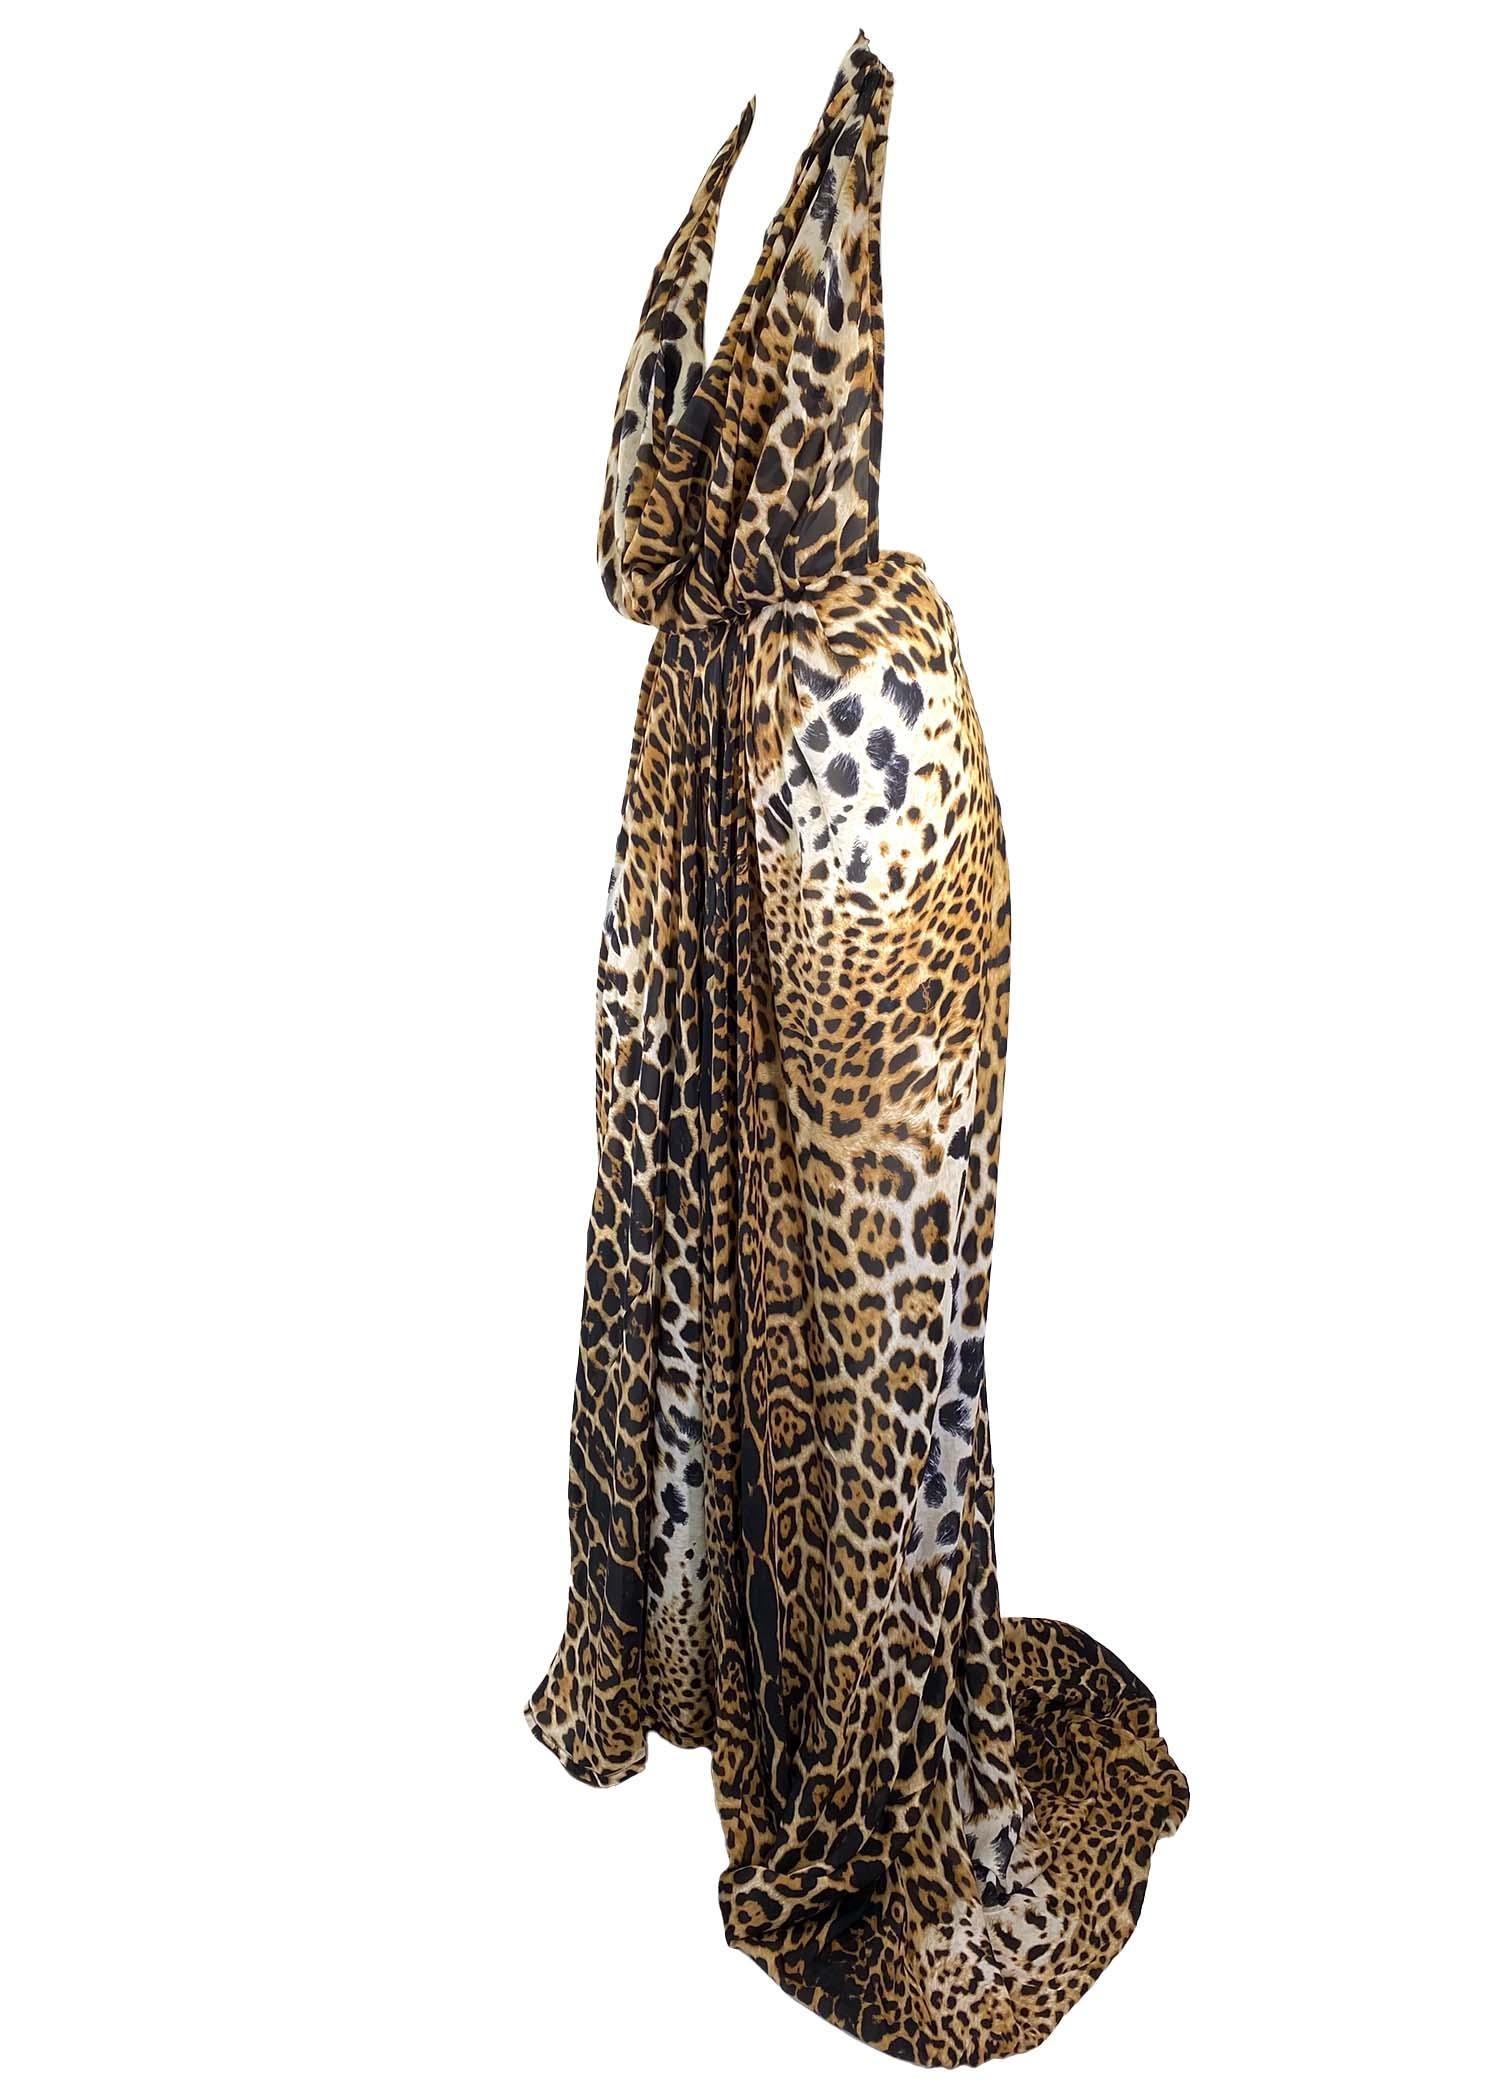 S/S 2002 Yves Saint Laurent by Tom Ford Silk Cheetah Print Gown Safari  For Sale 3